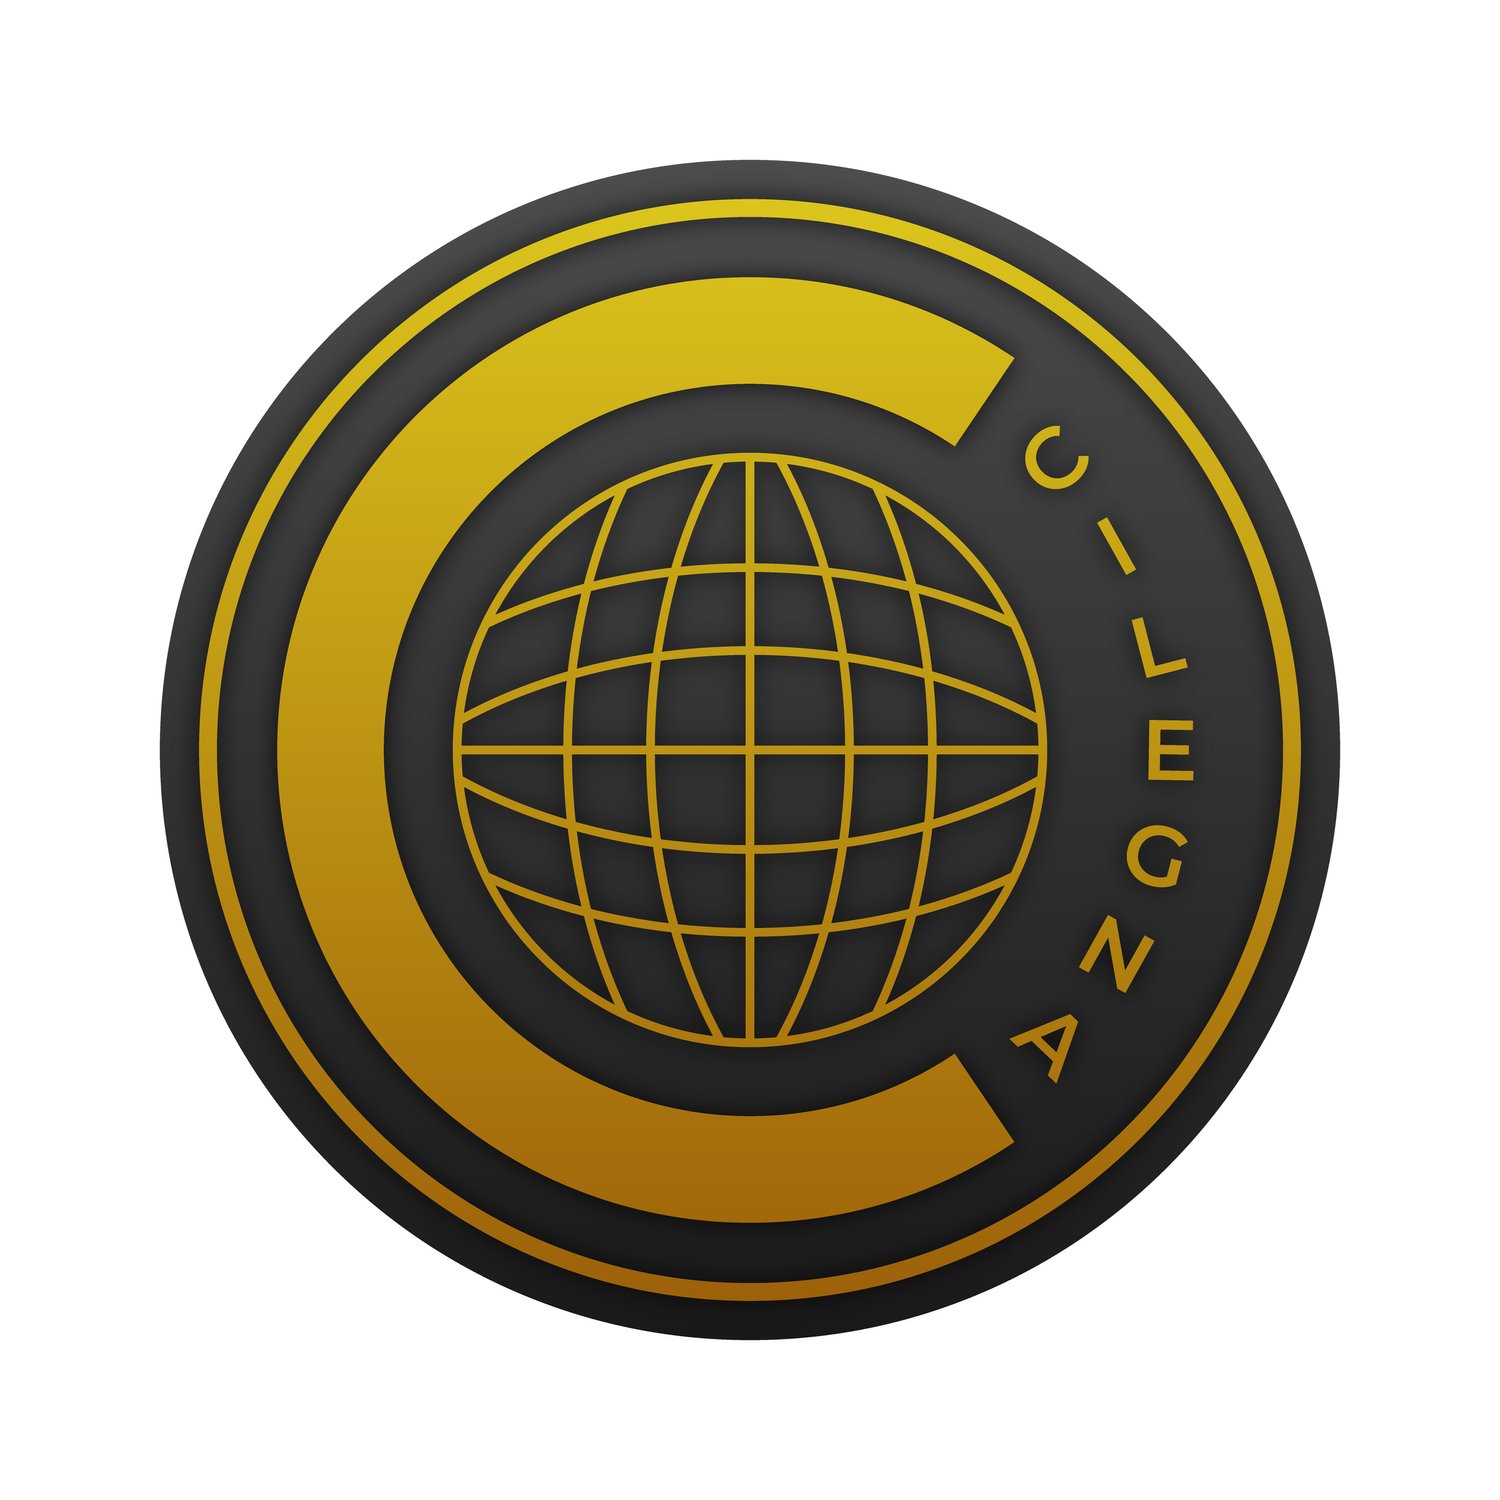 CILEGNA LLC